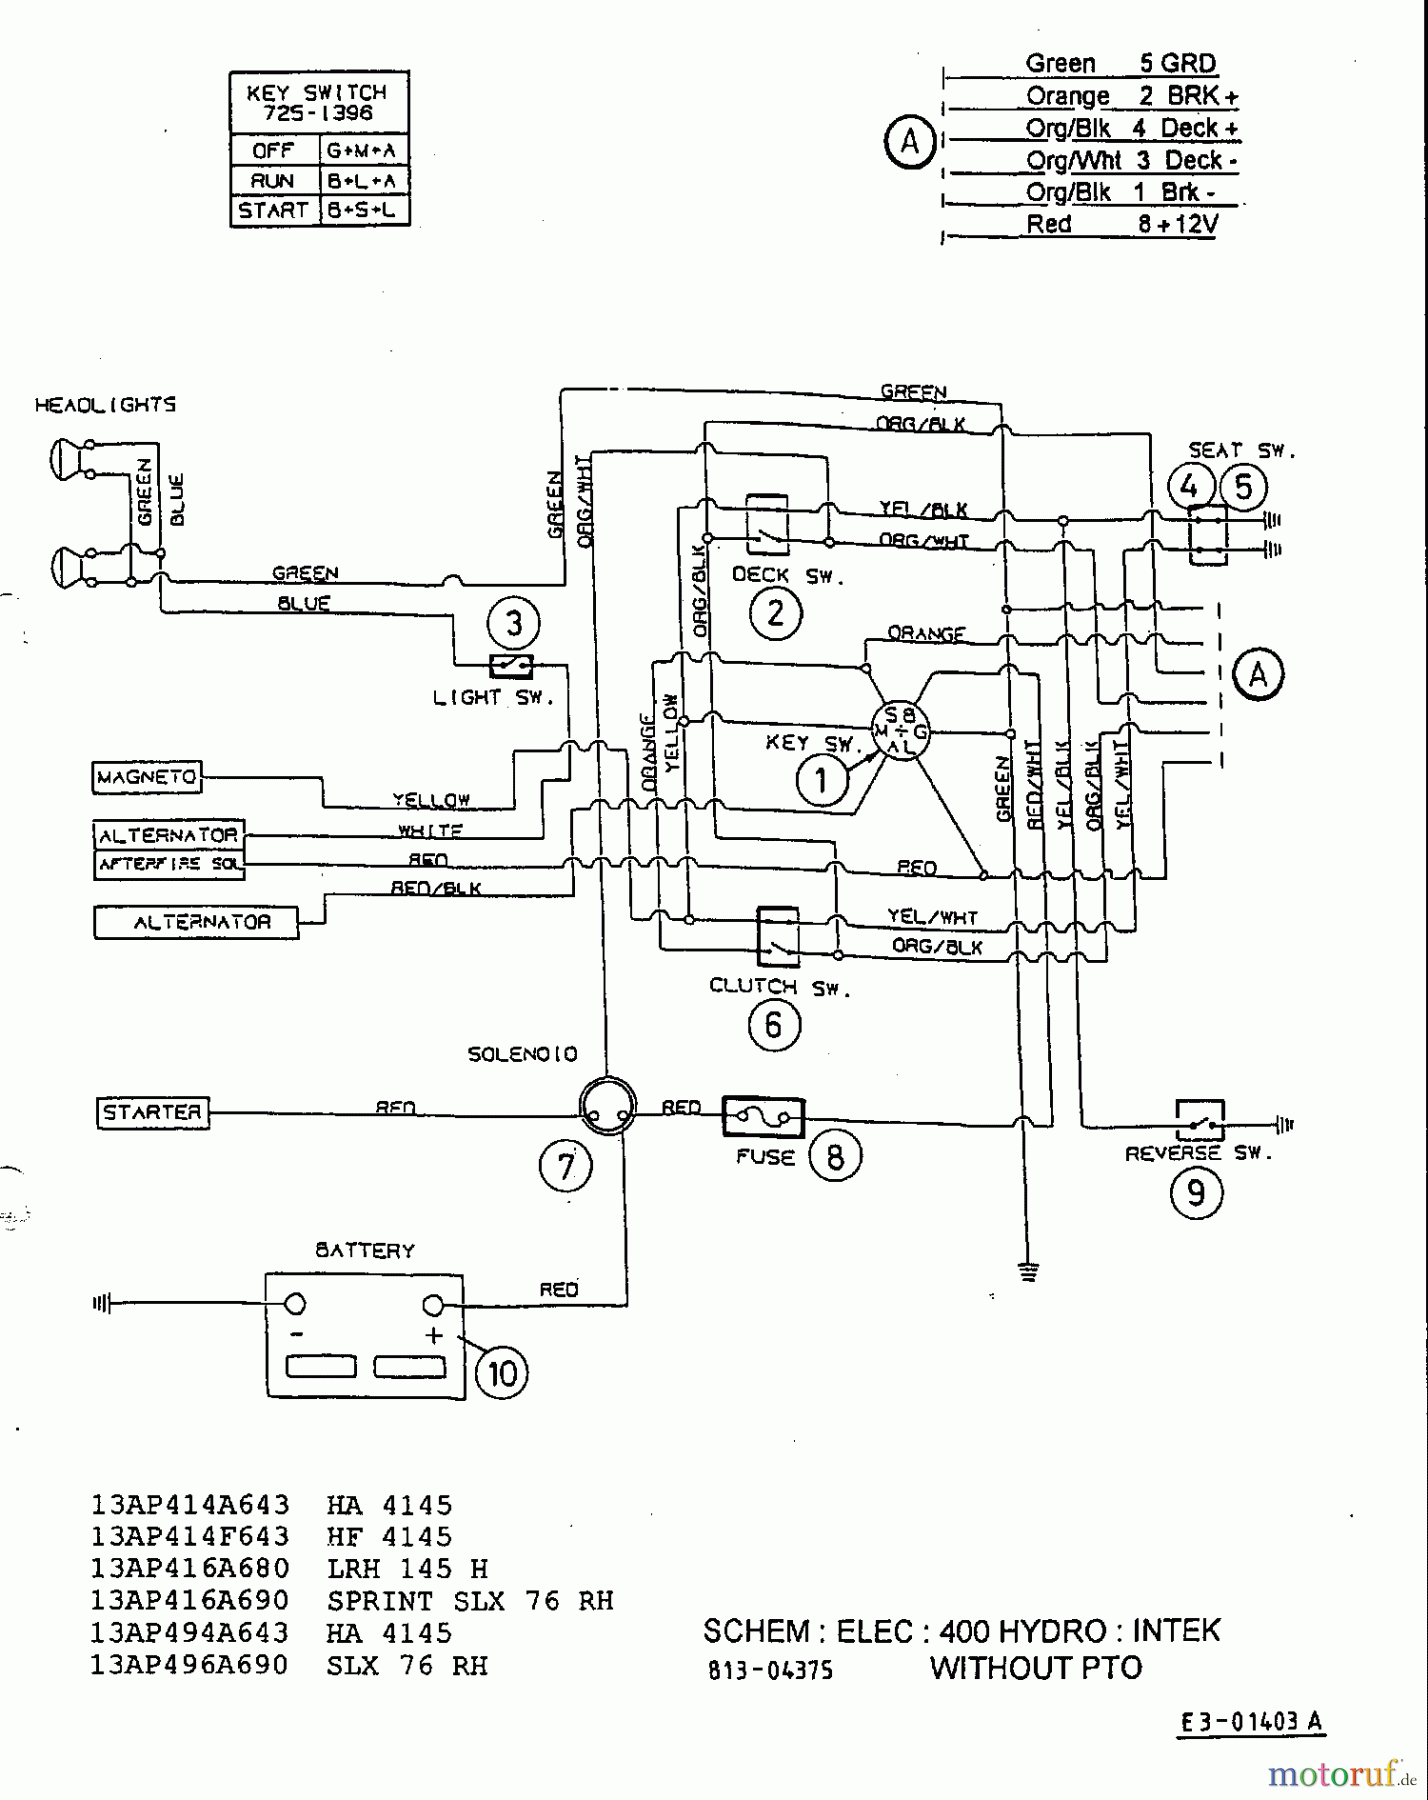  Gutbrod Lawn tractors Sprint SLX 76 RH 13AP416A690  (2000) Wiring diagram Intek without electric clutch